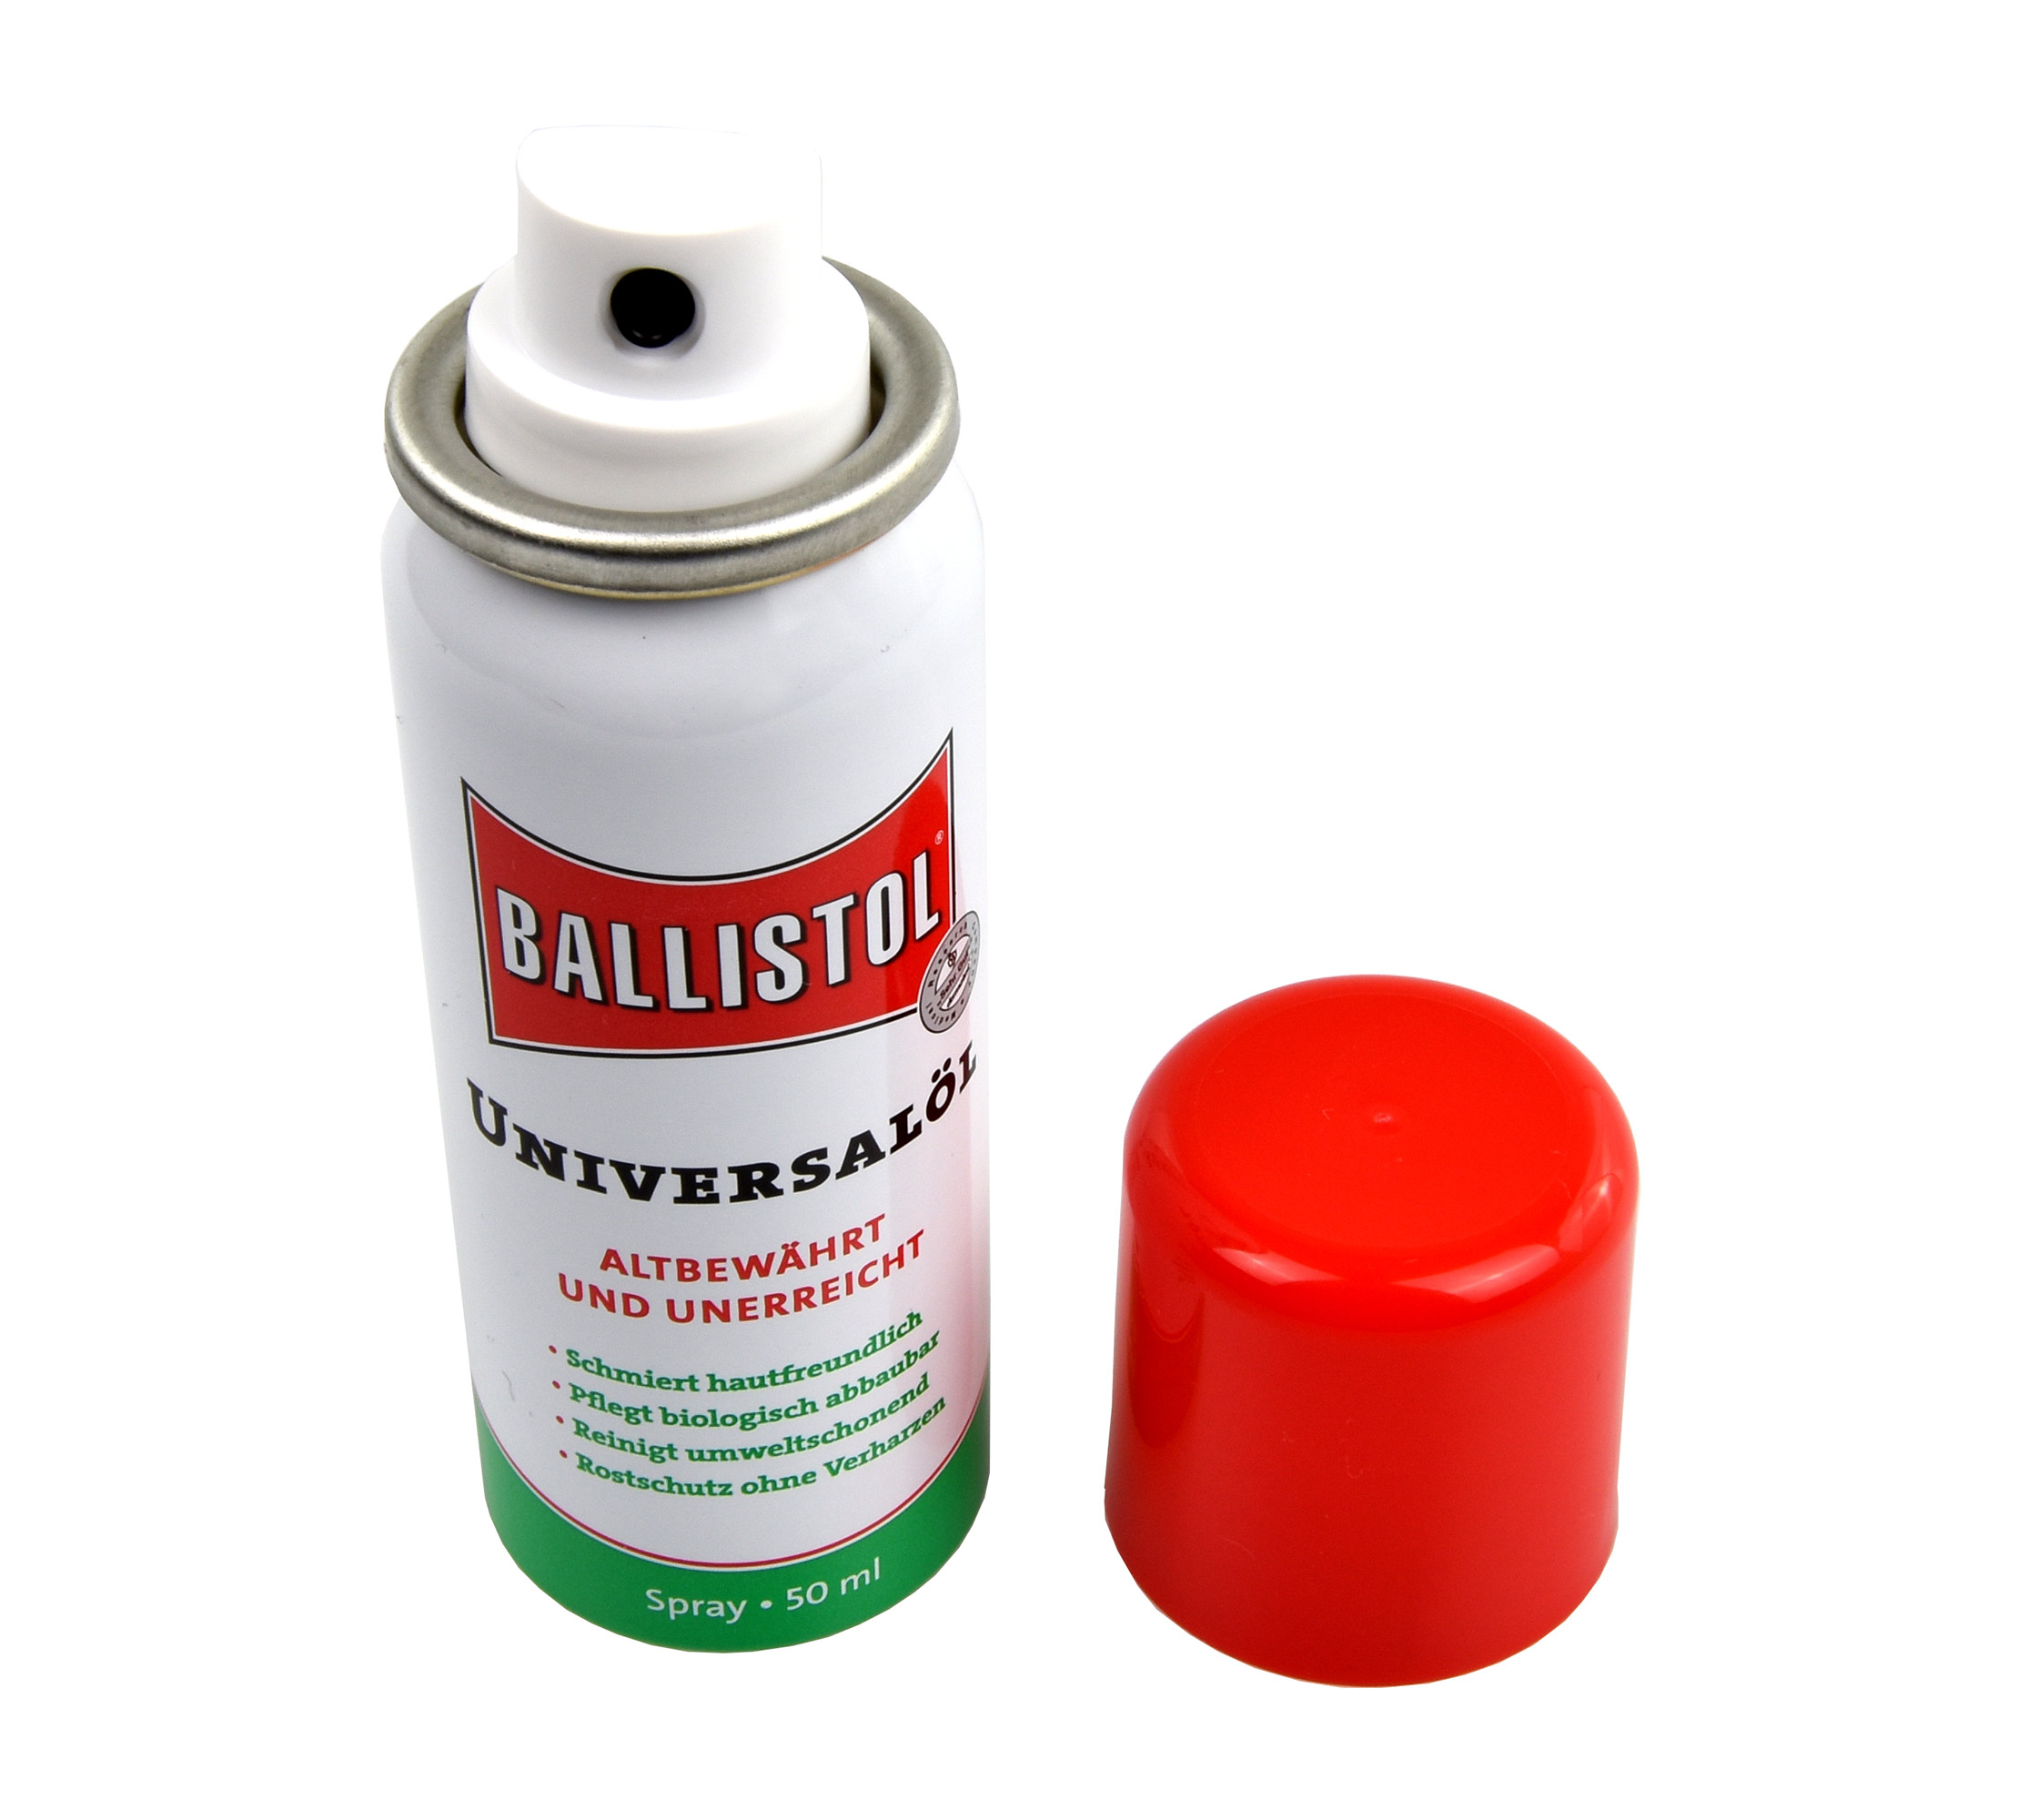 Ballistol glide spray for foosball rods incl. microfibre cloth